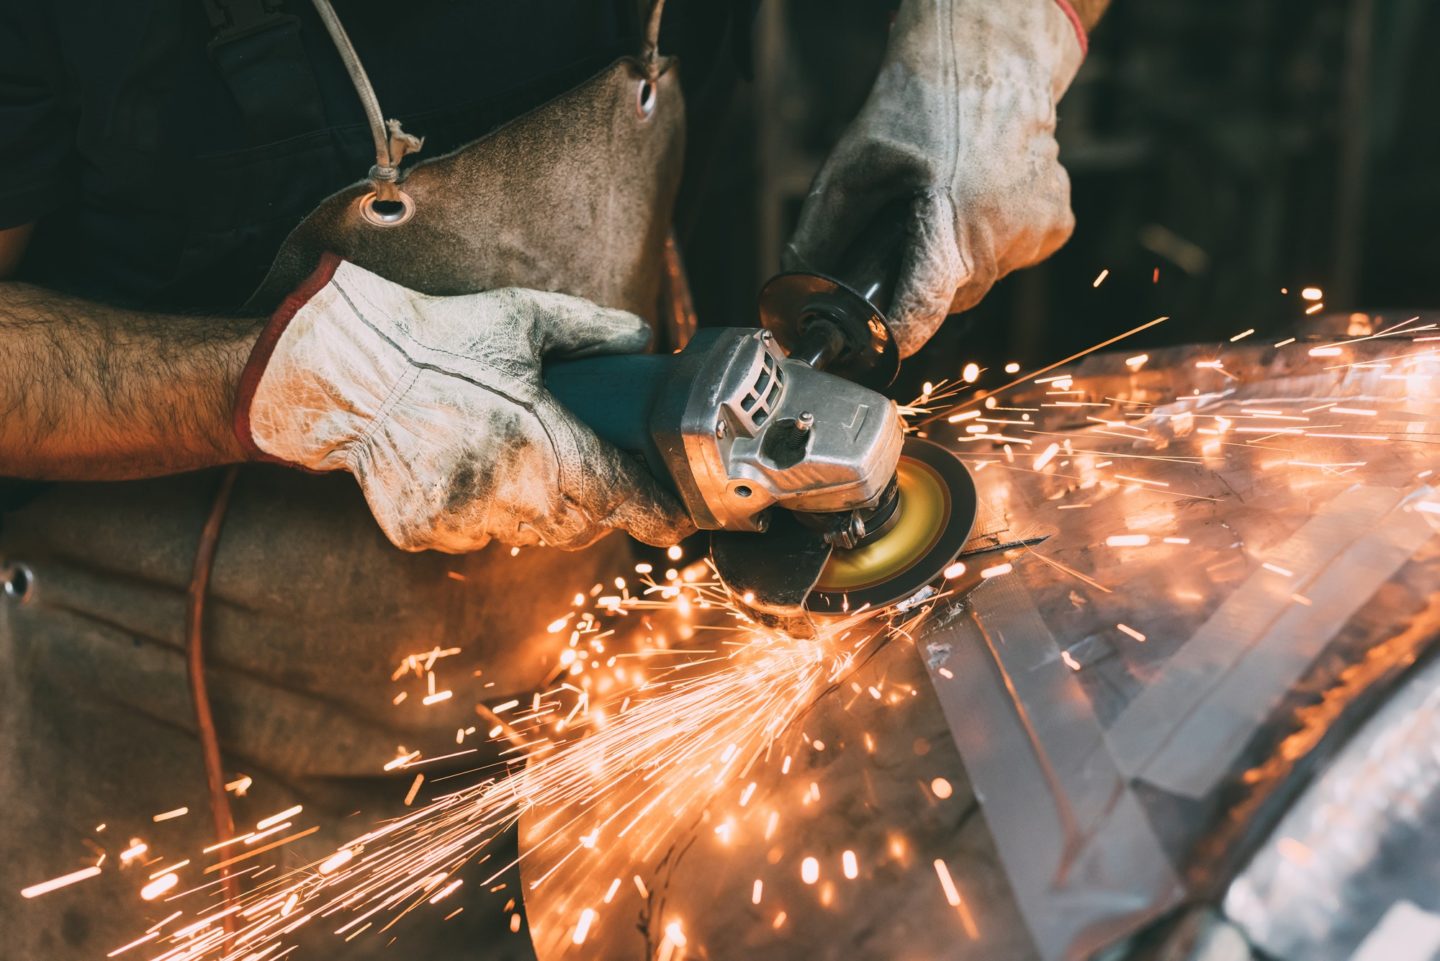 Hands of metalworker grinding copper in forge workshop